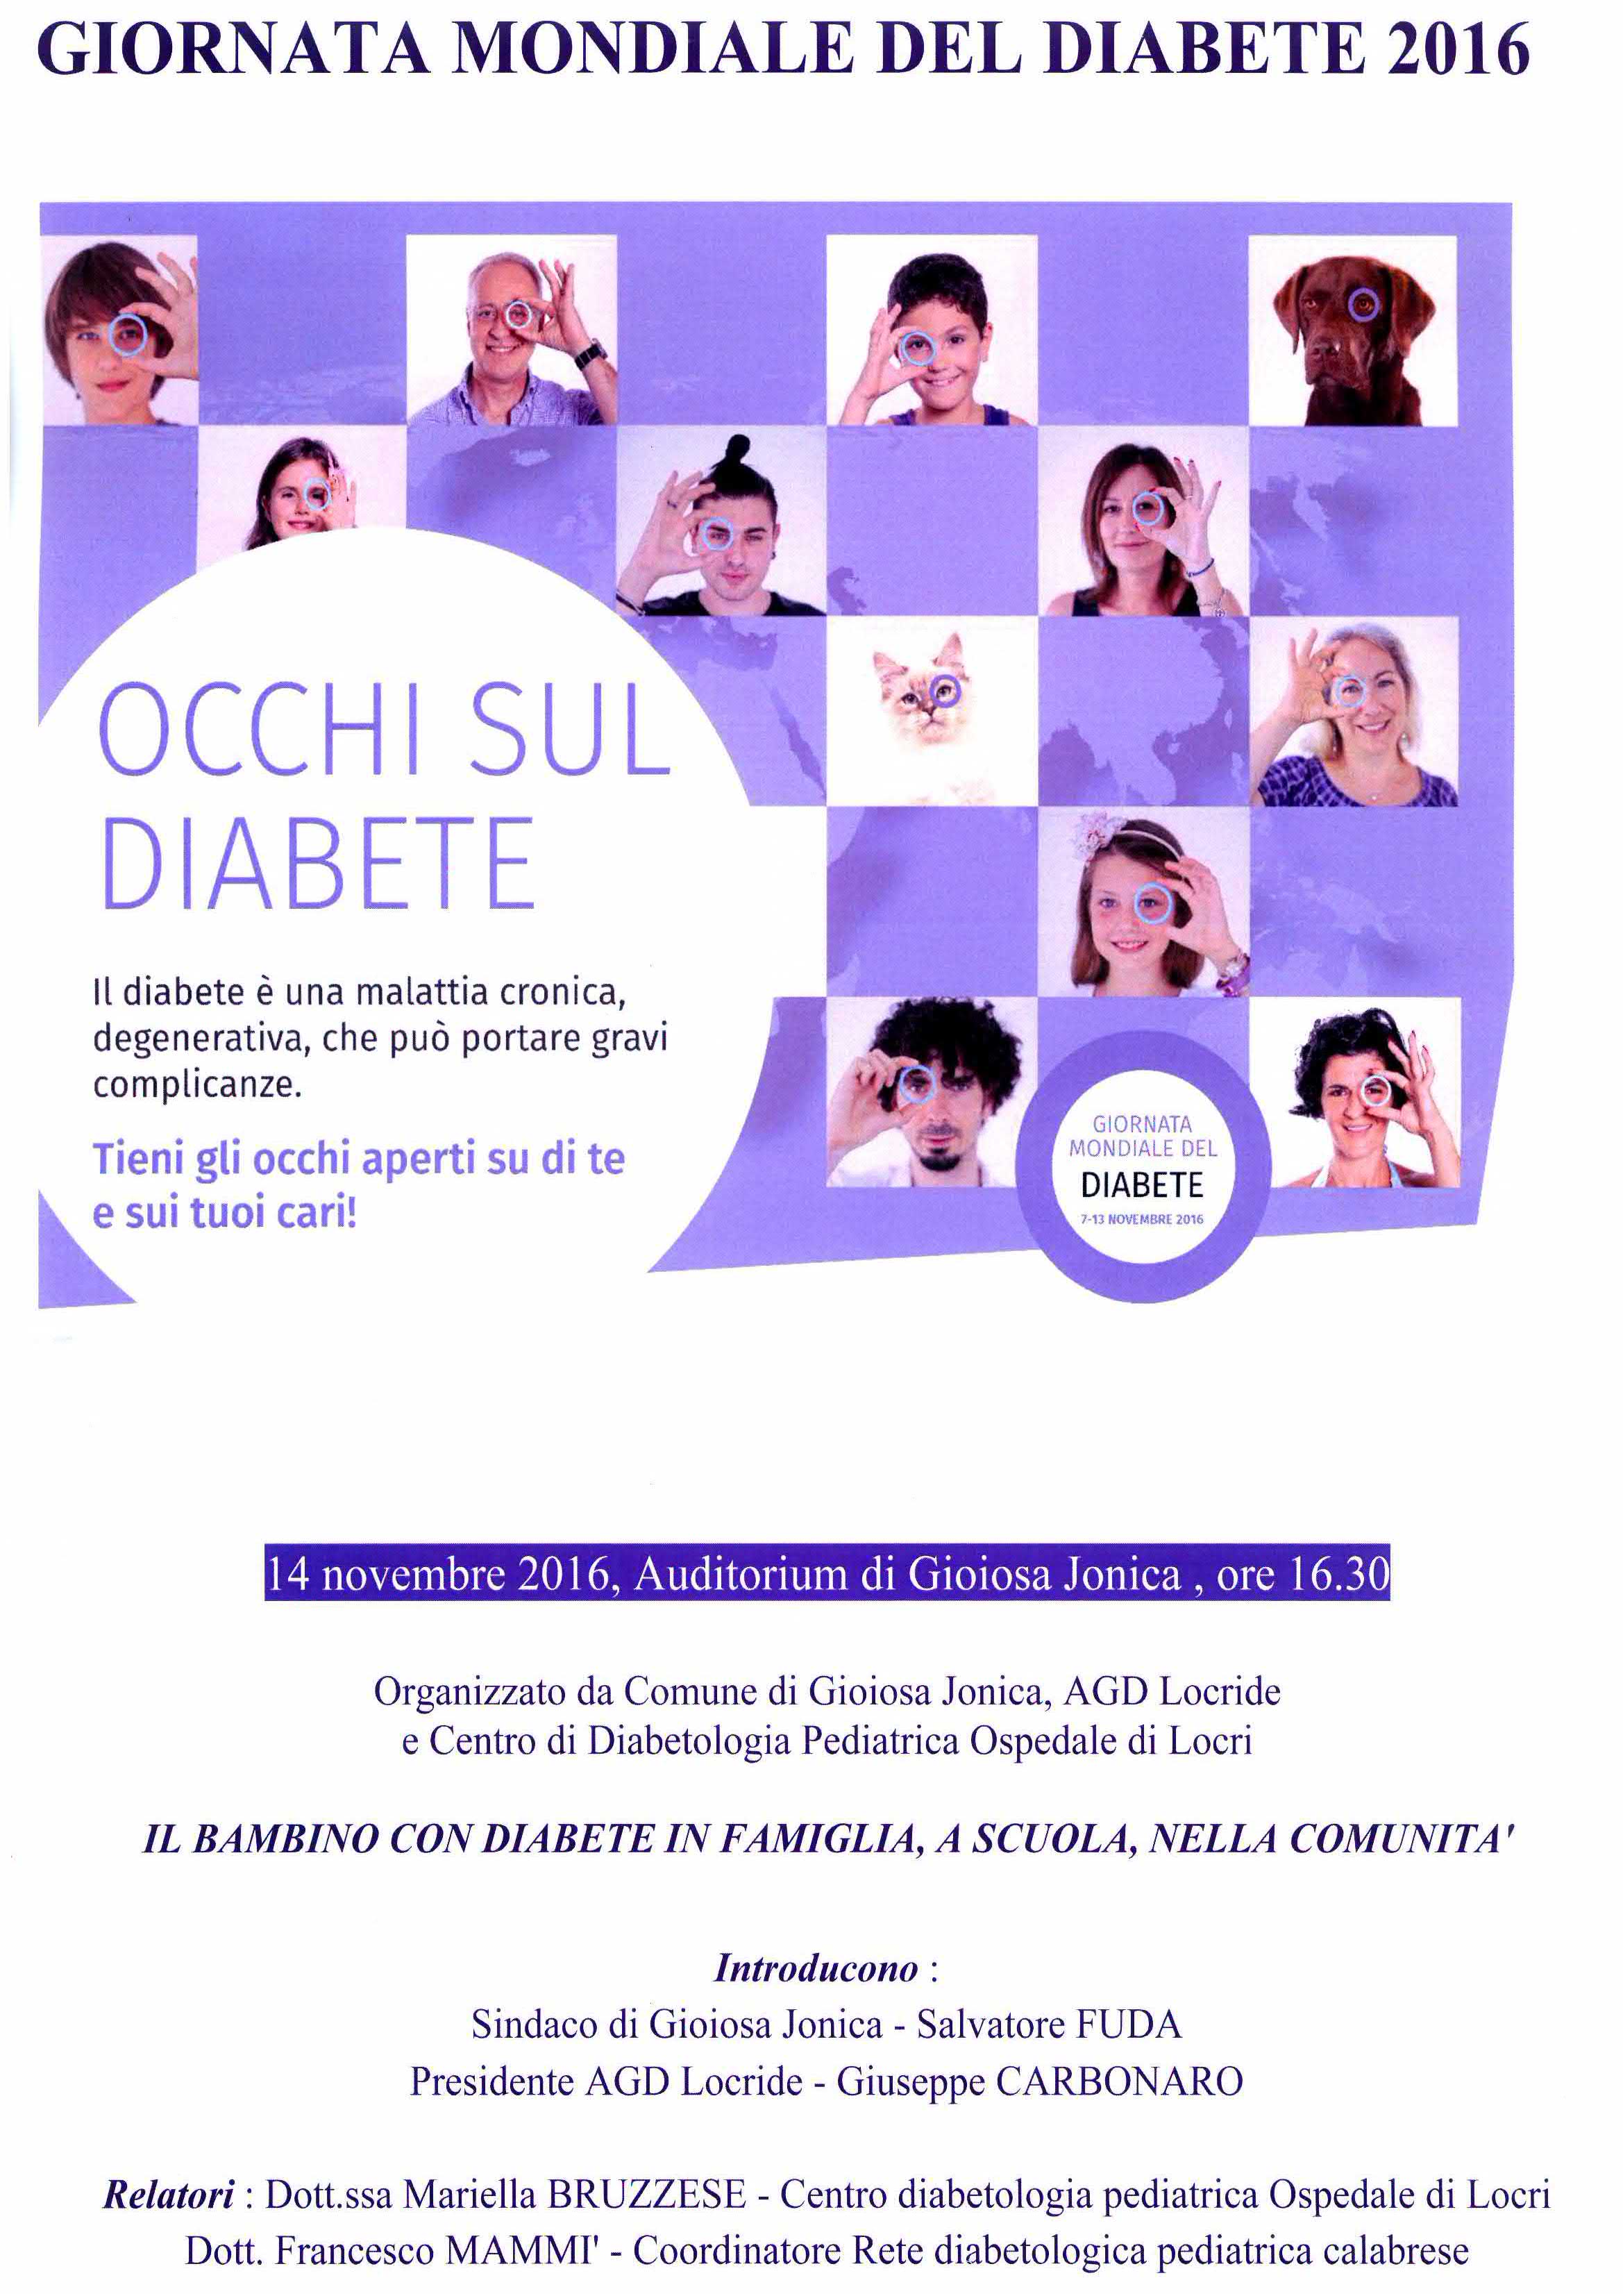 iniziatina-14-novembre-diabete